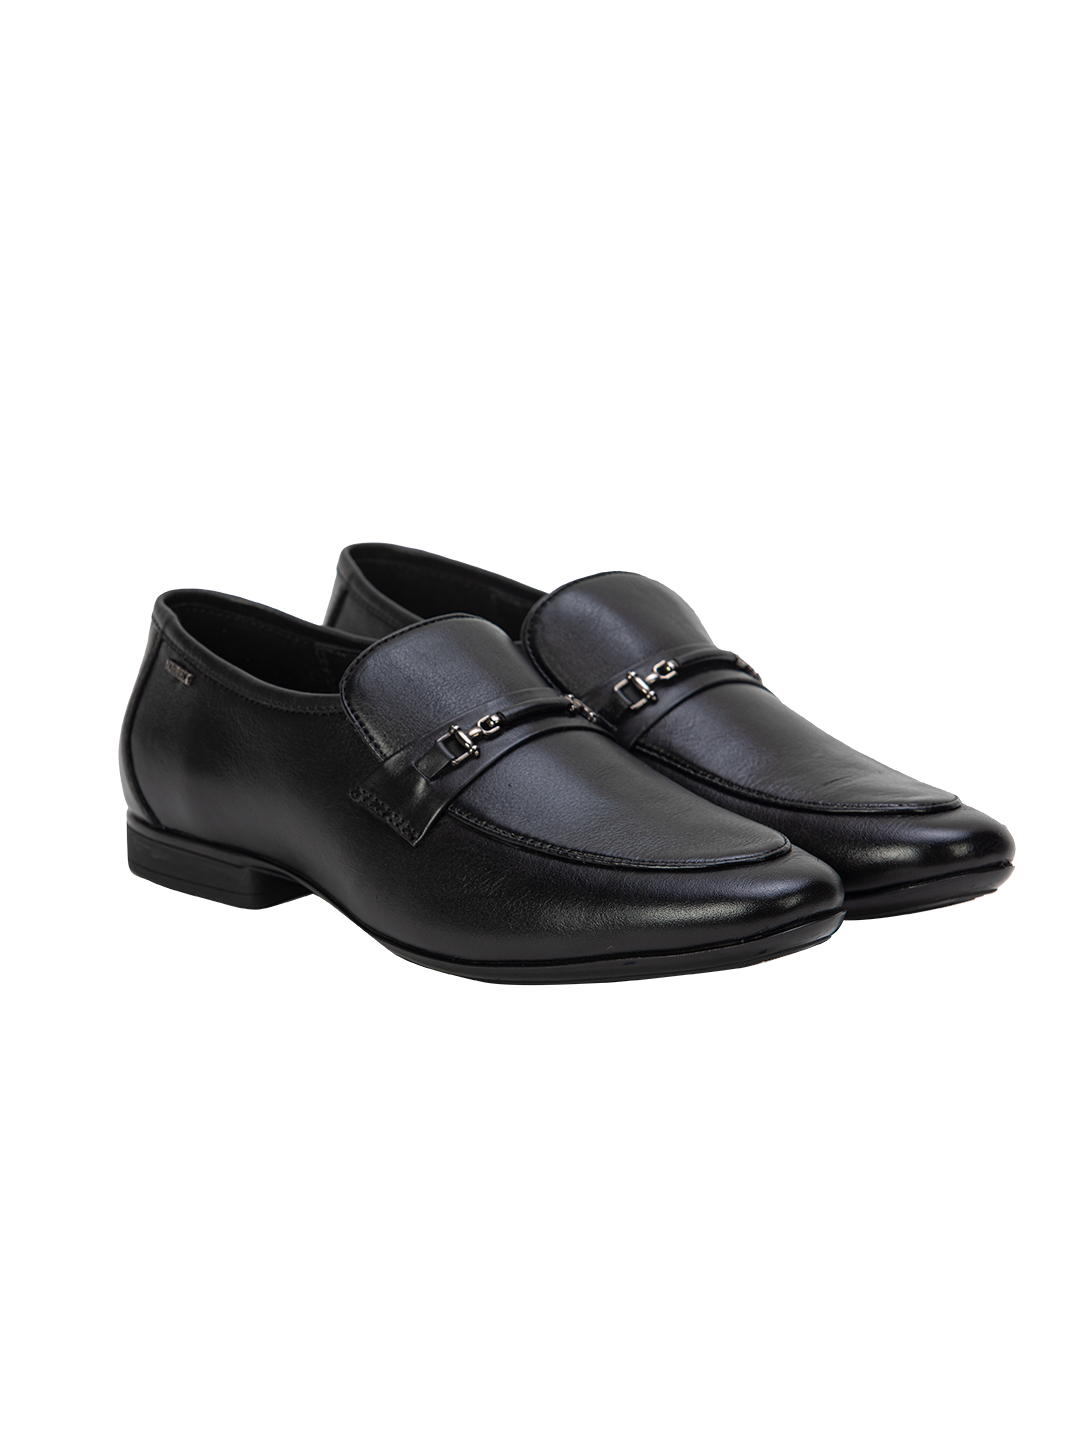 Buy Von Wellx Germany Comfort Black Glib Shoes Online in Indore